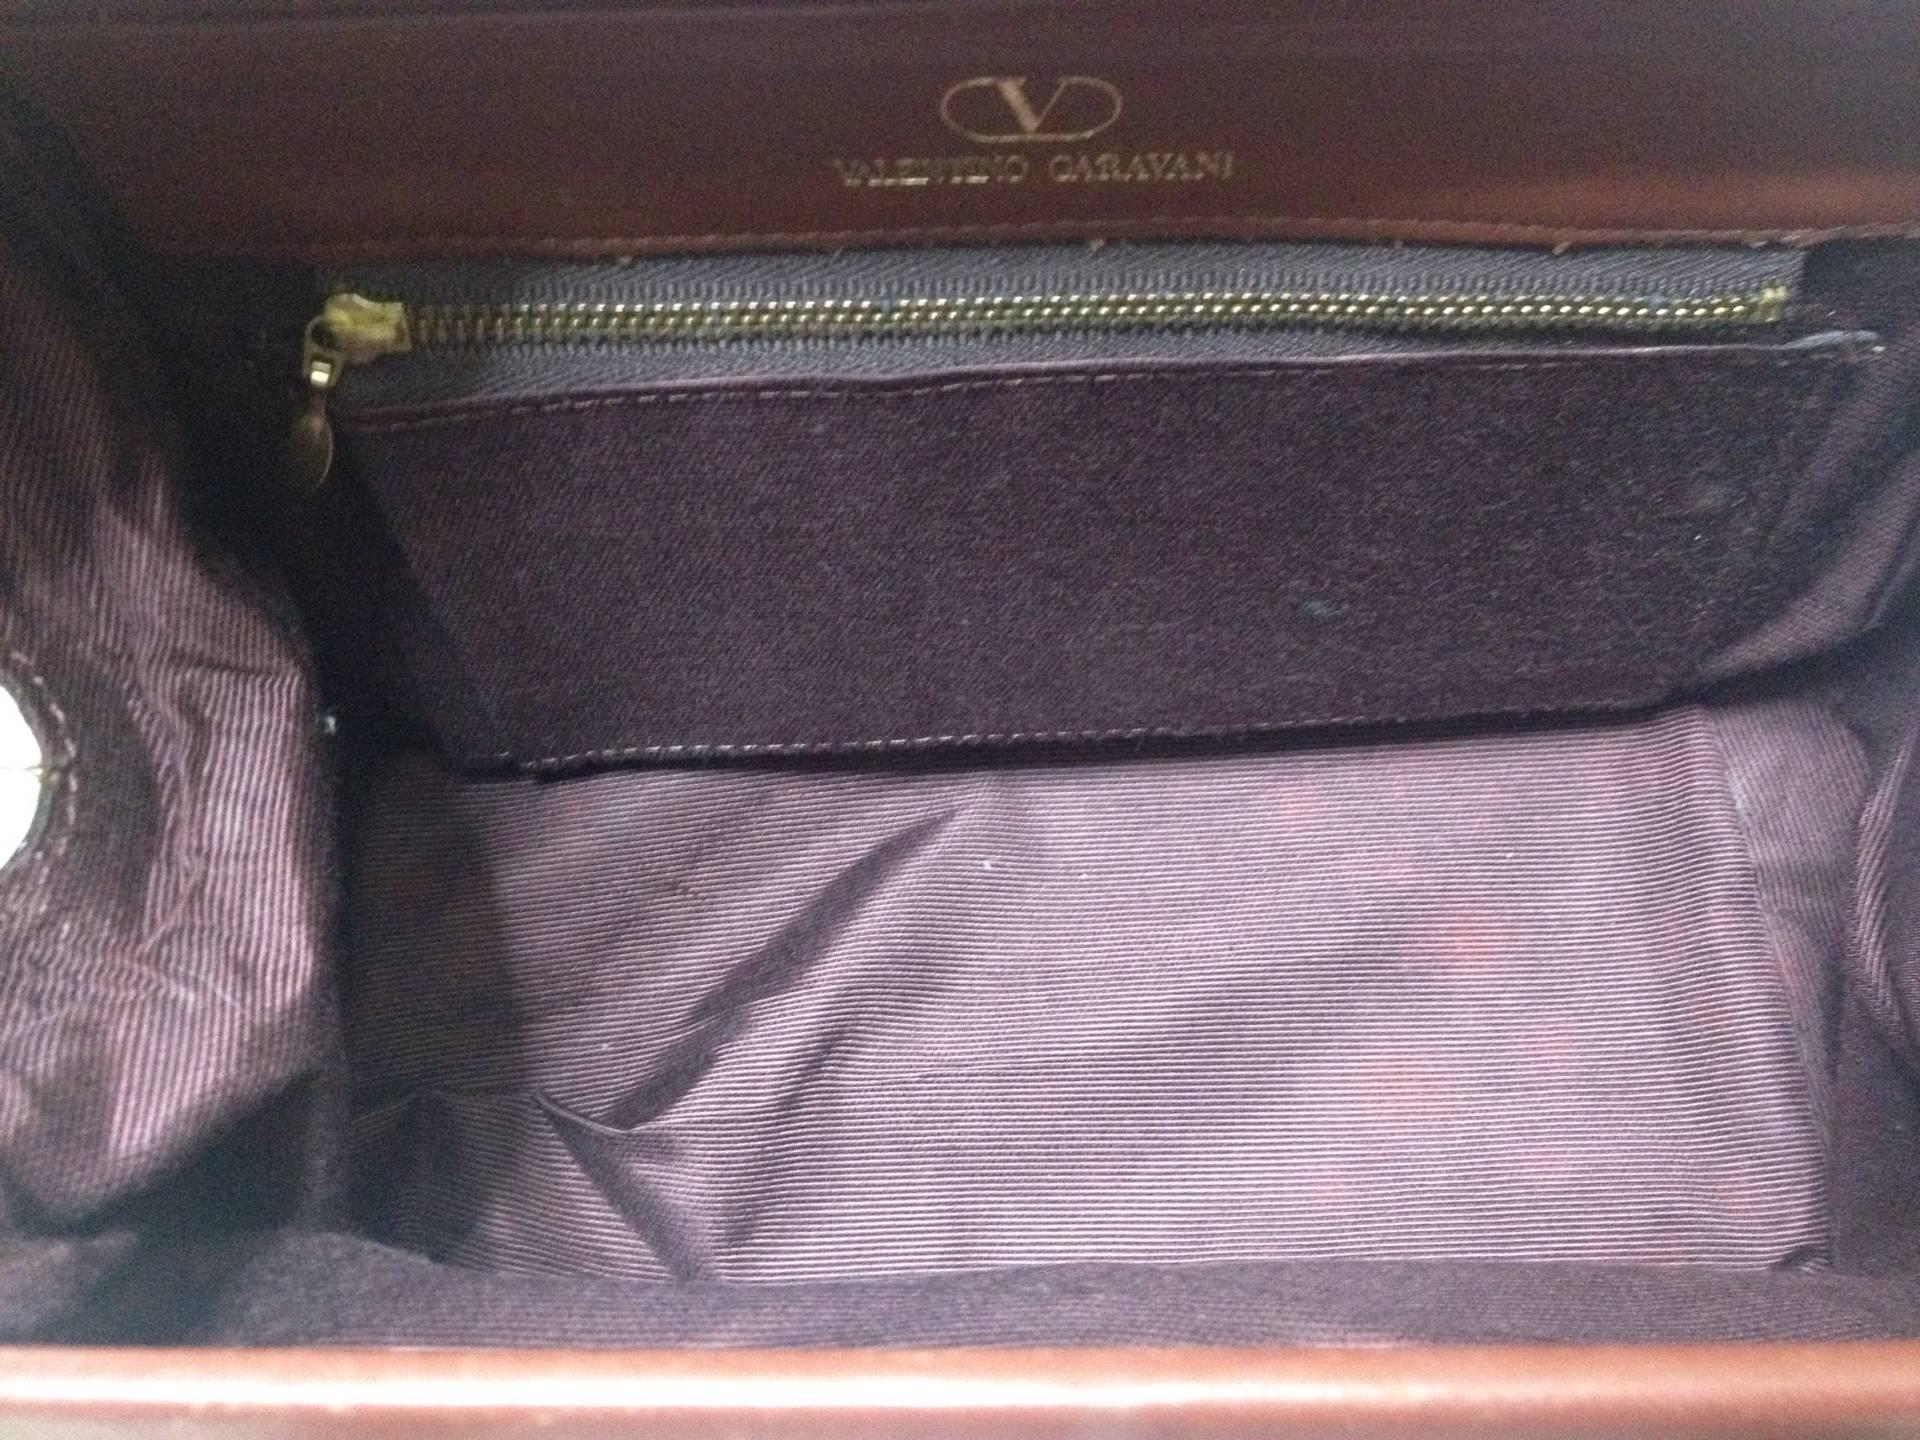 Vintage Valentino Garavani, brick brown leather mini handbag with golden logo  2